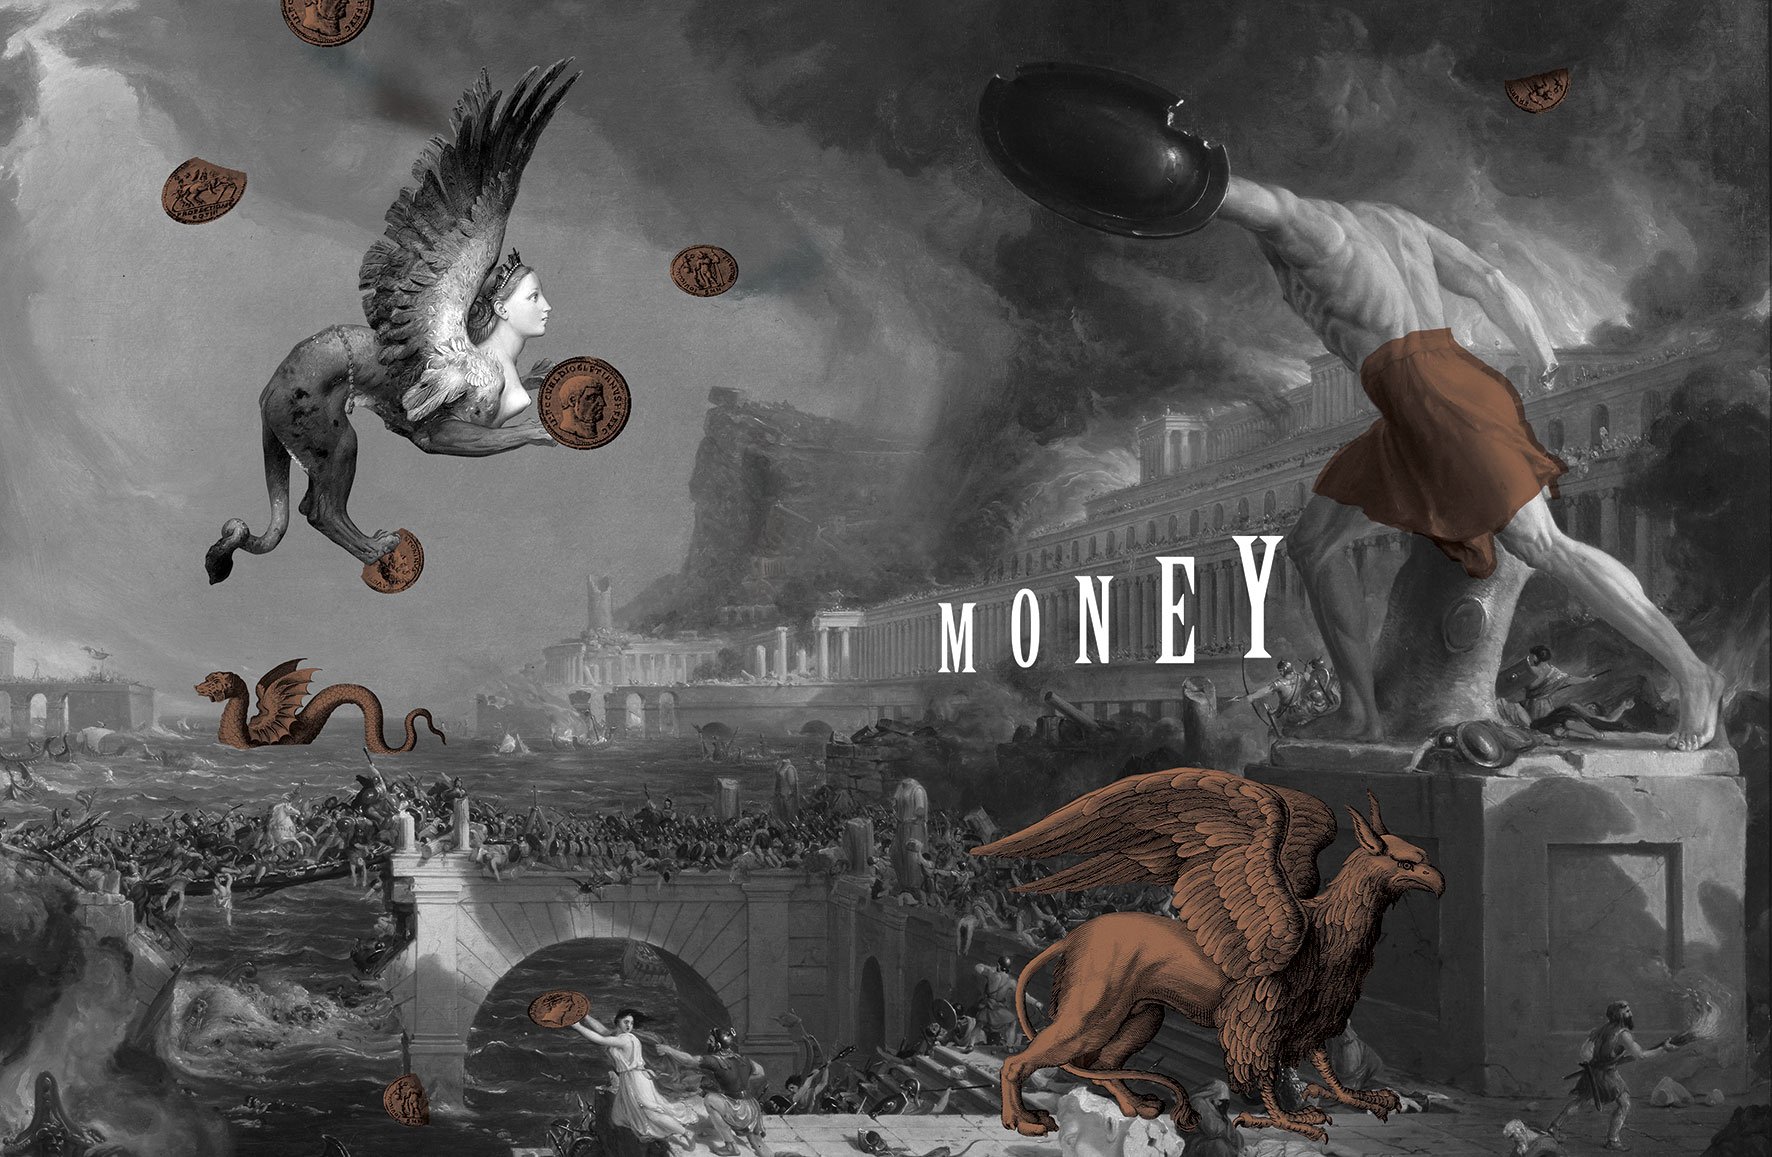 THE ILLUSTRATED ETYMOLOGICON - Money